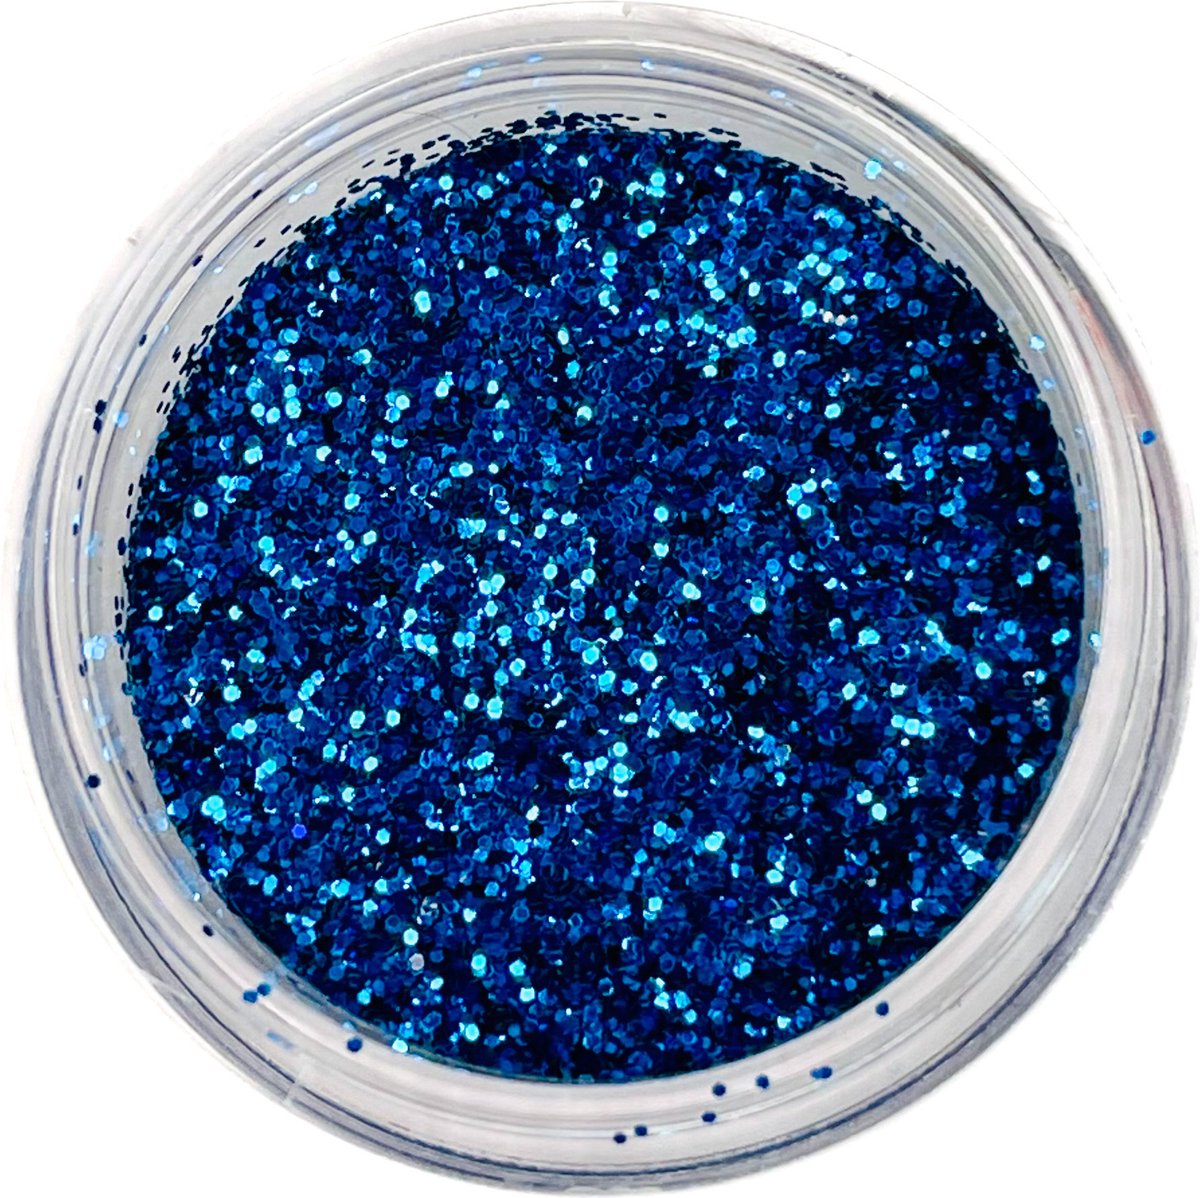 Roena's Beauty - Glitter - Sapphire